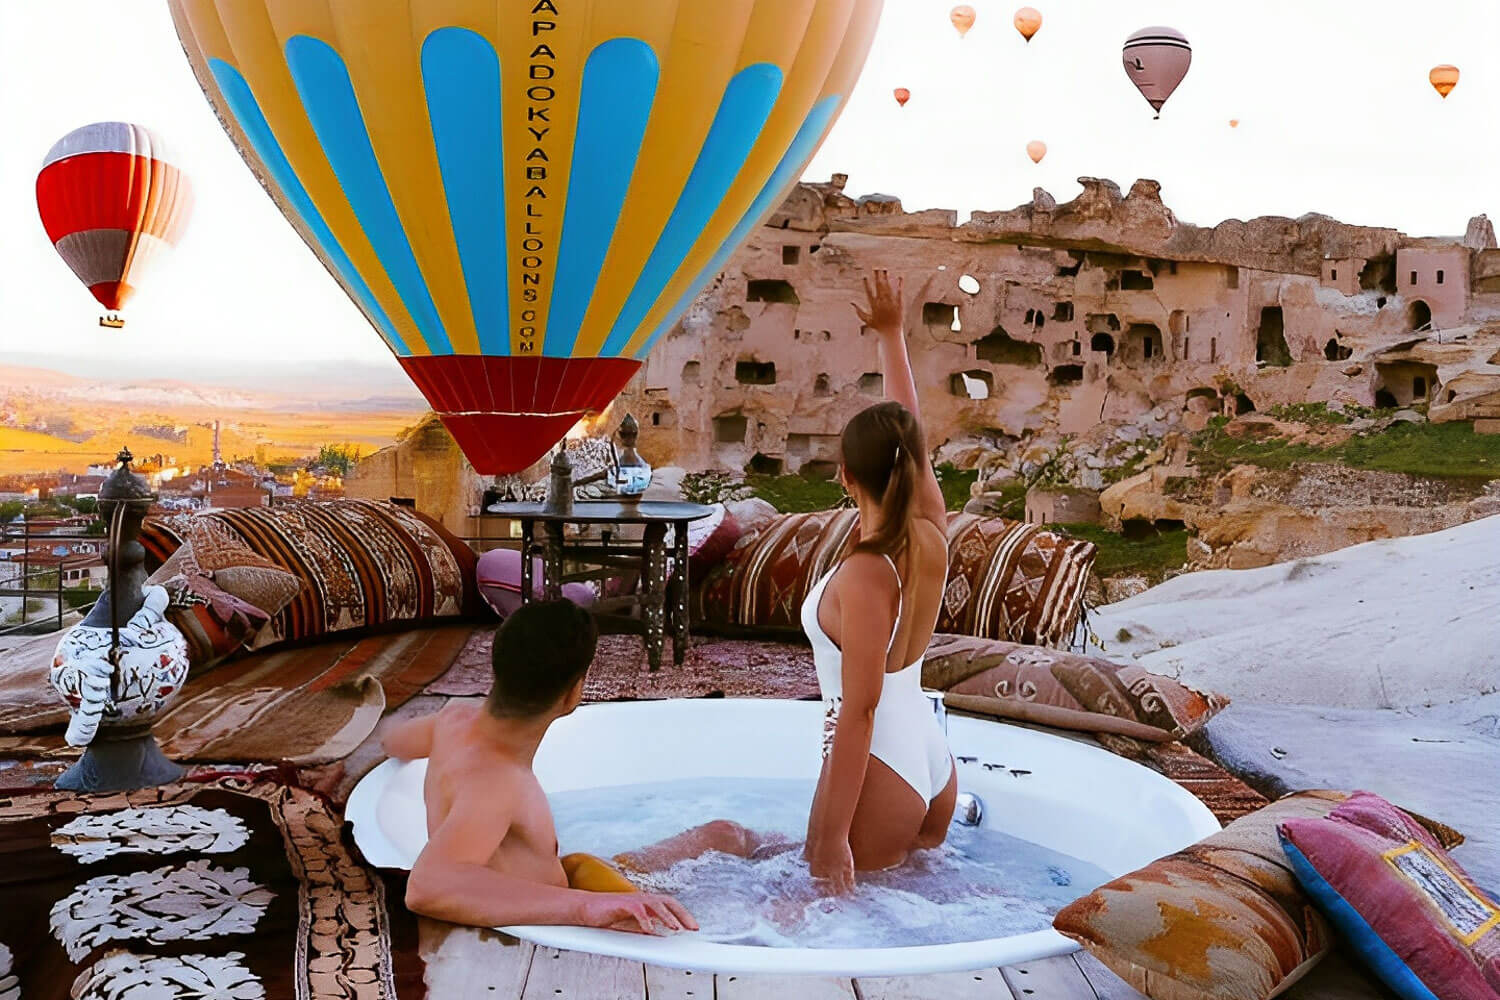 Seki Cave Suites, one of the best hotels in Cappadocia